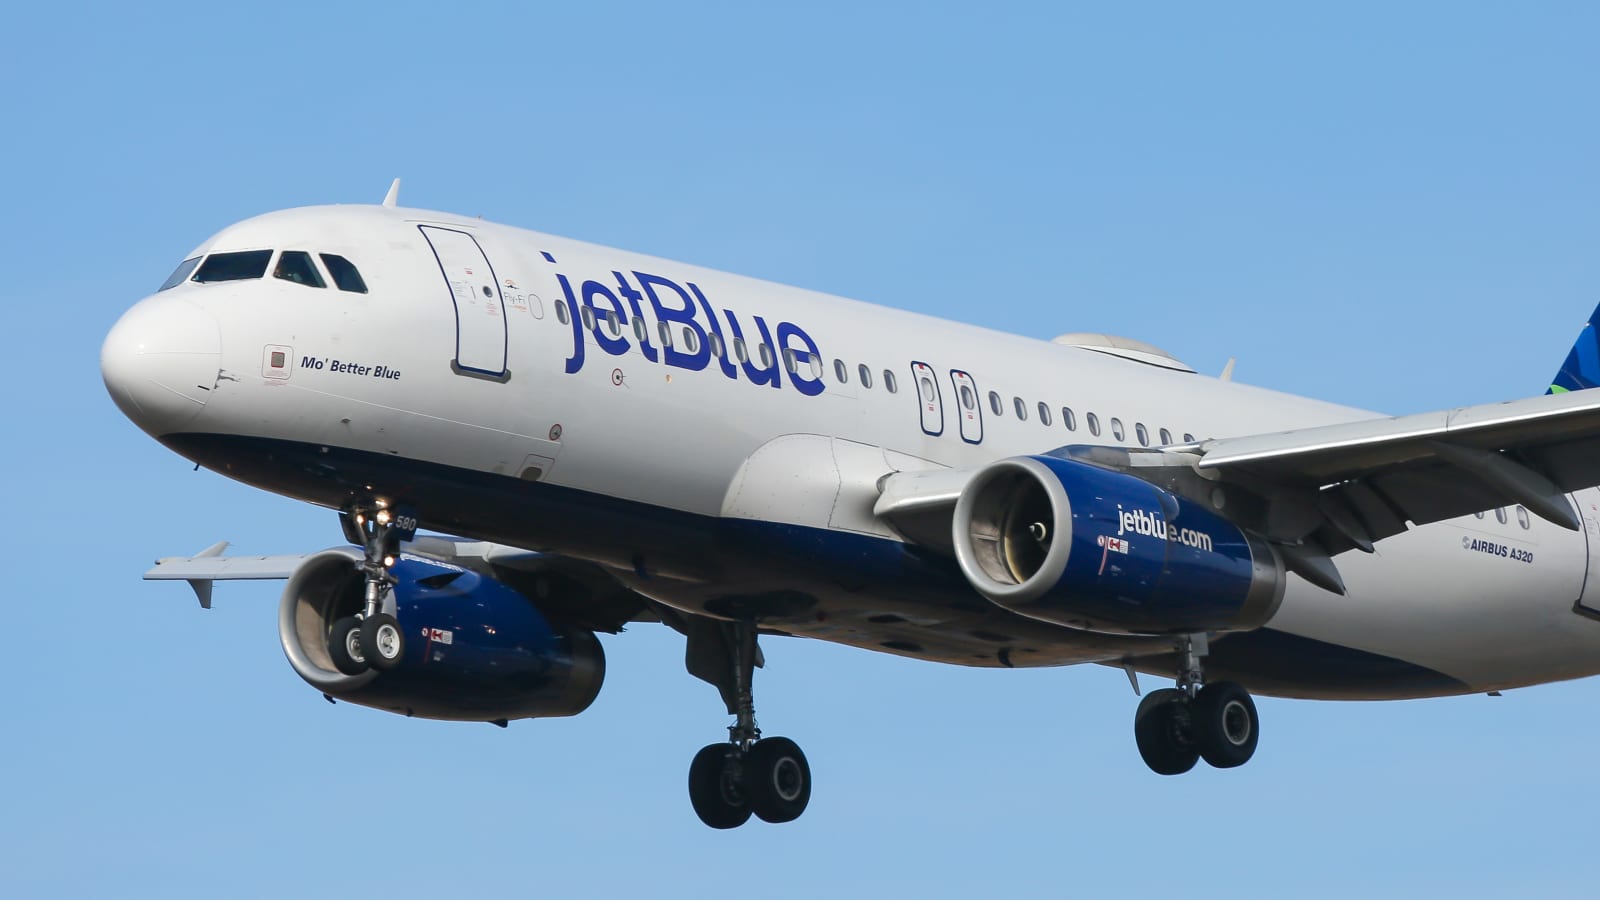 Jetblue Flight Schedule Release 2022 Jetblue Cuts Schedule To Just Essential Flights As Coronavirus Spreads